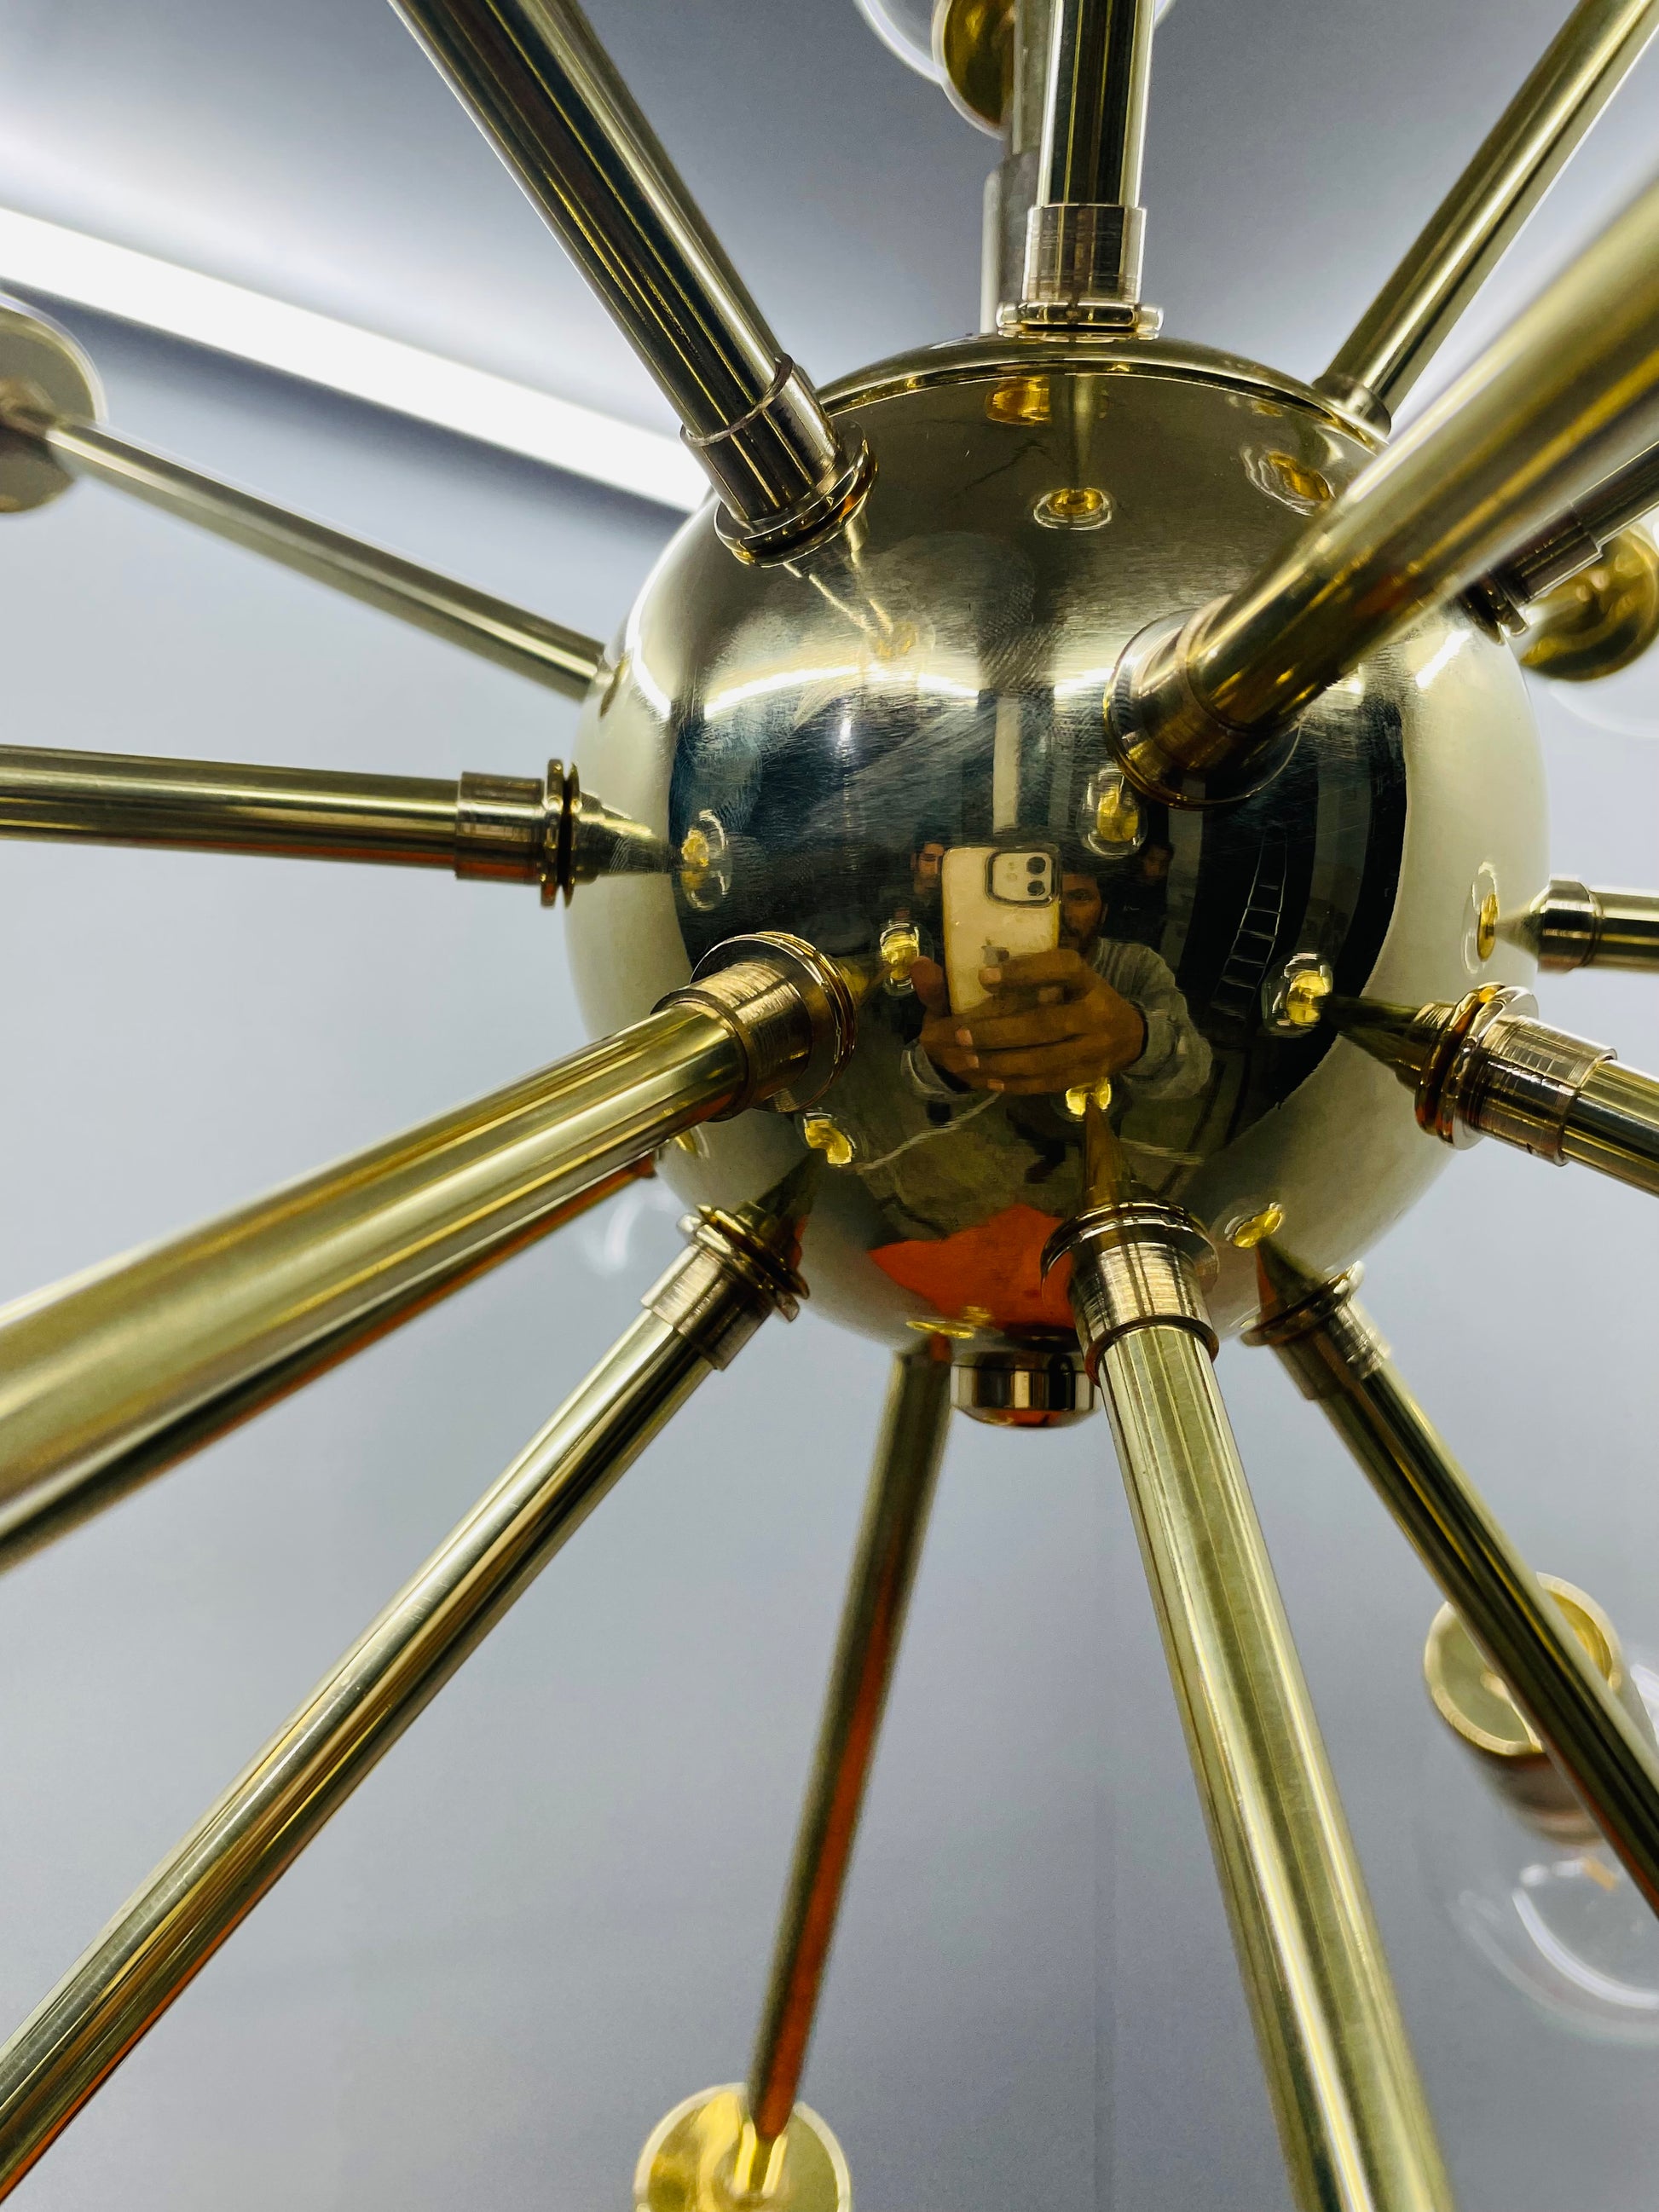 Mid Century Stilnovo Brass Sputnik Chandelier, Handmade Brass Ceiling Lamp Light, Sputnik Dining Room Chandelier 18 arms/lights - Global Lights Hub